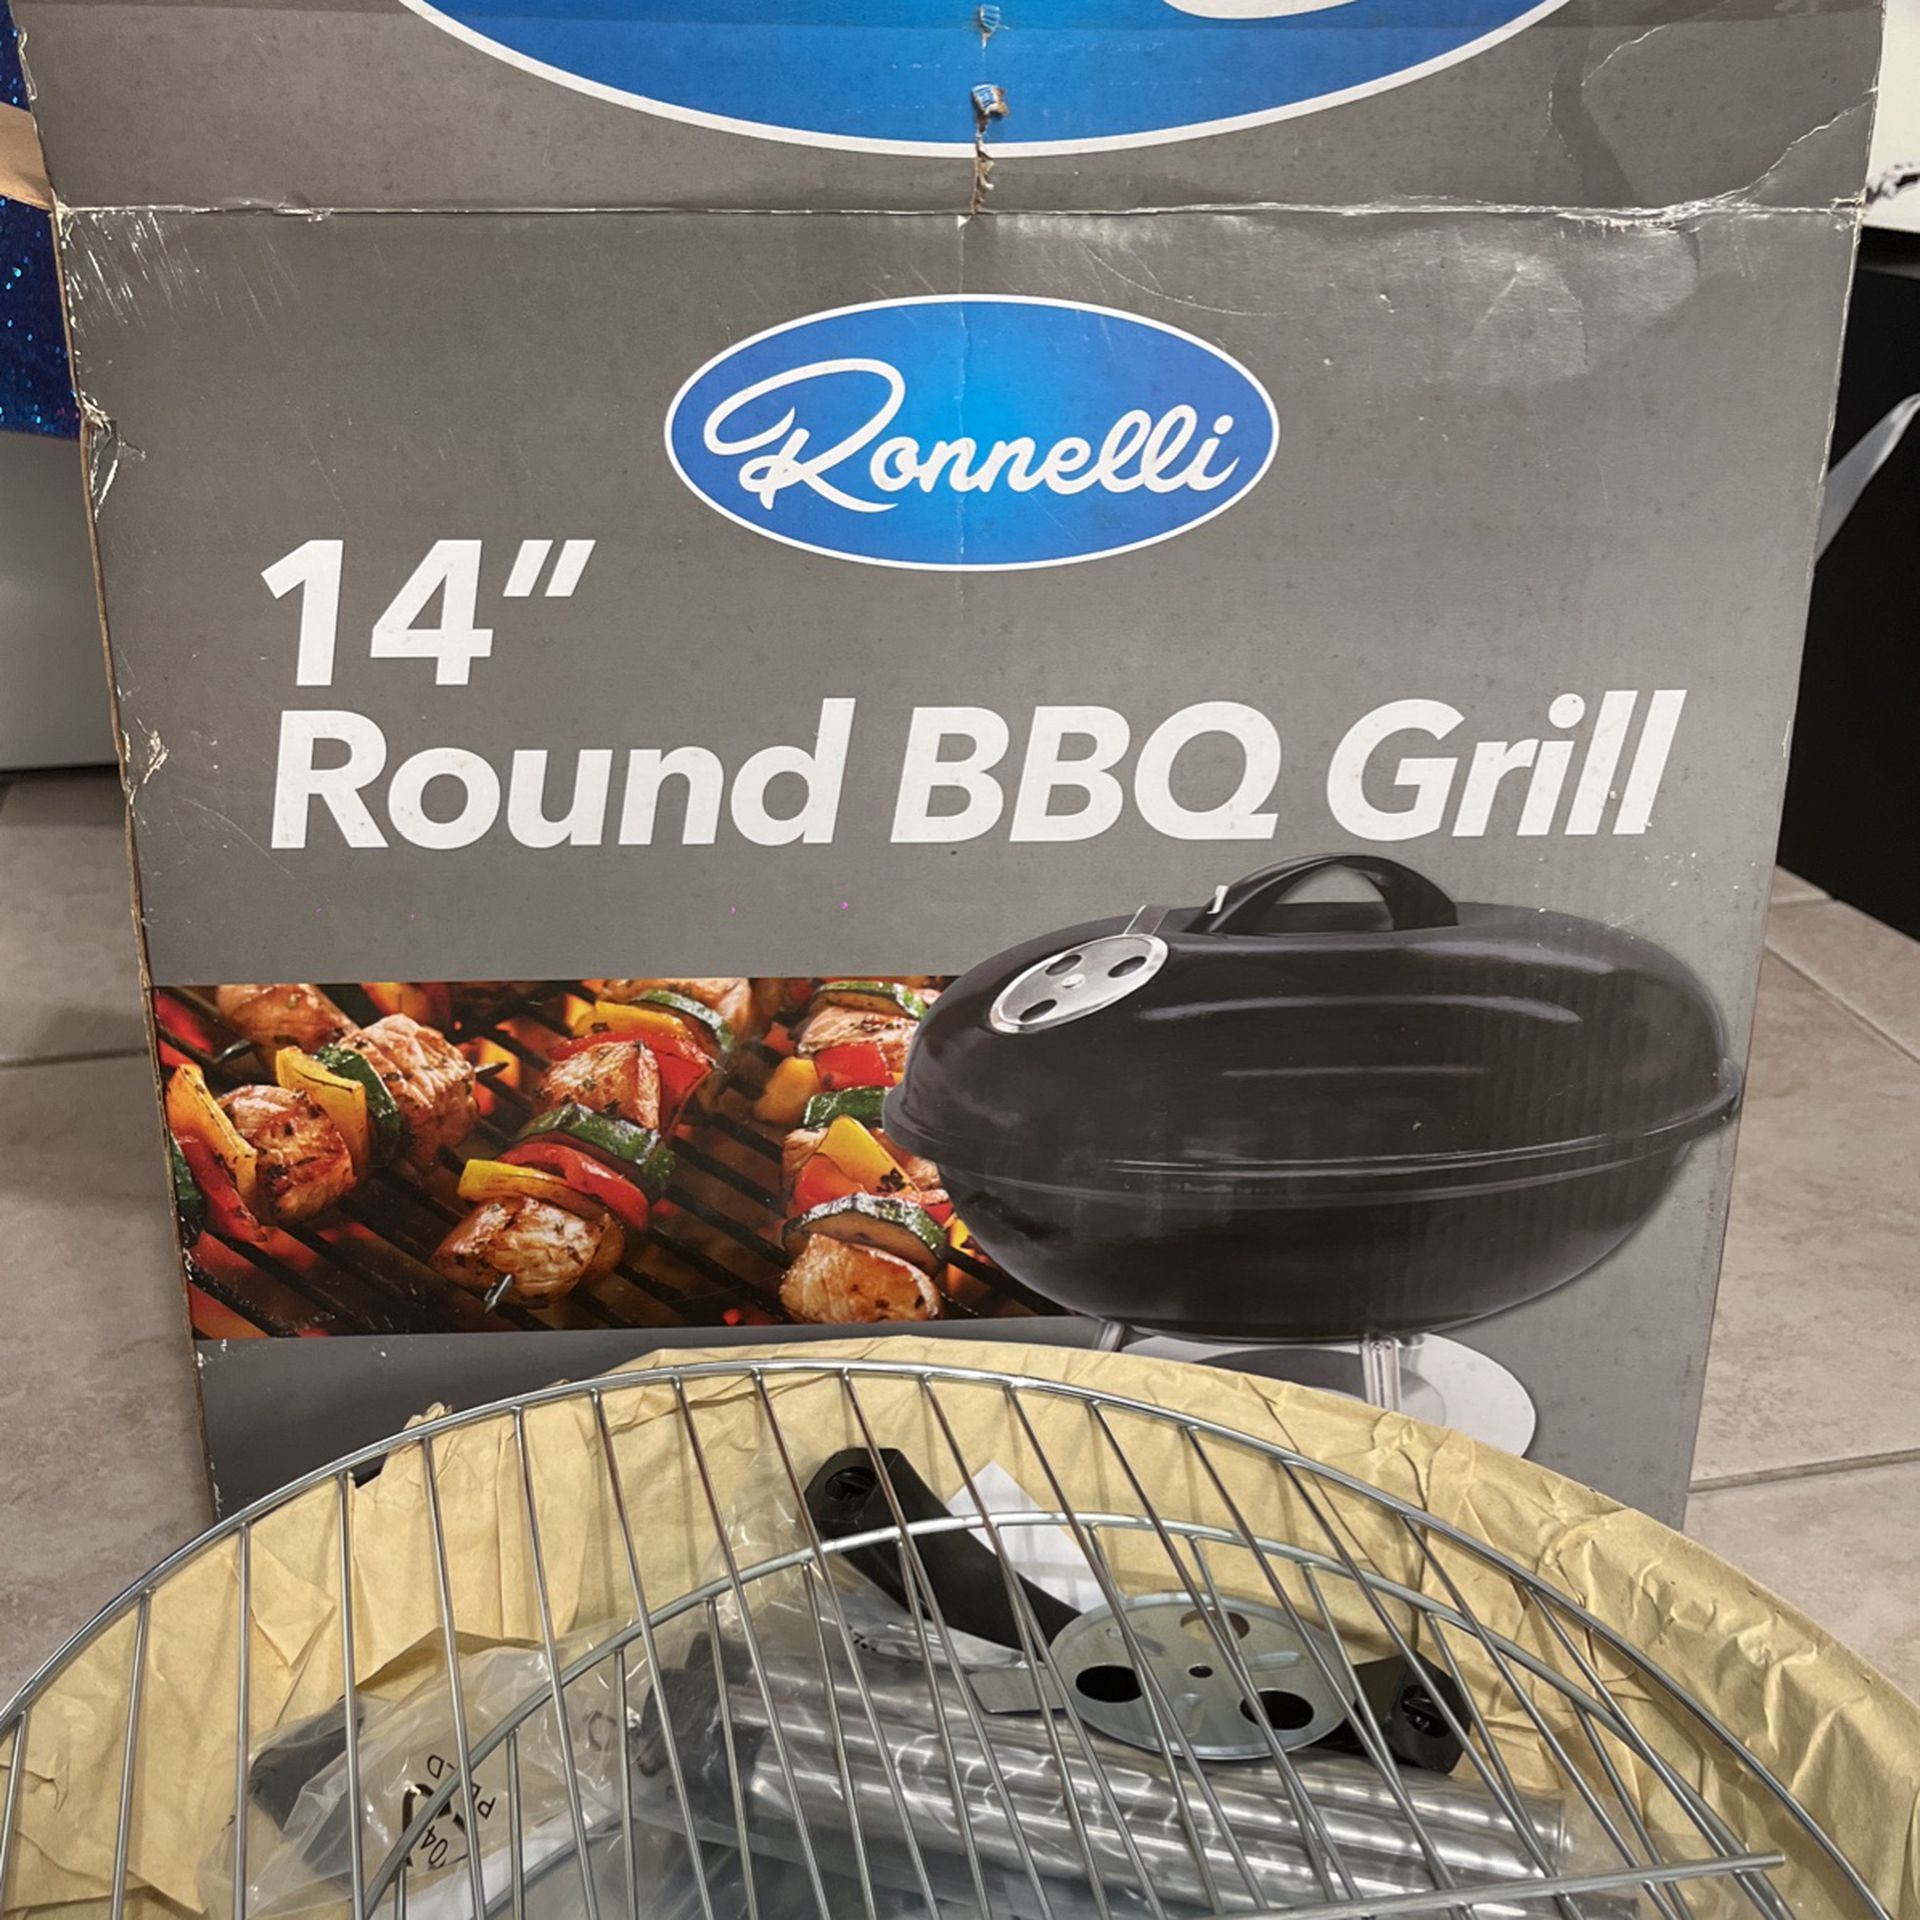 Ronnelli 14’’ Round Bbq Grill 